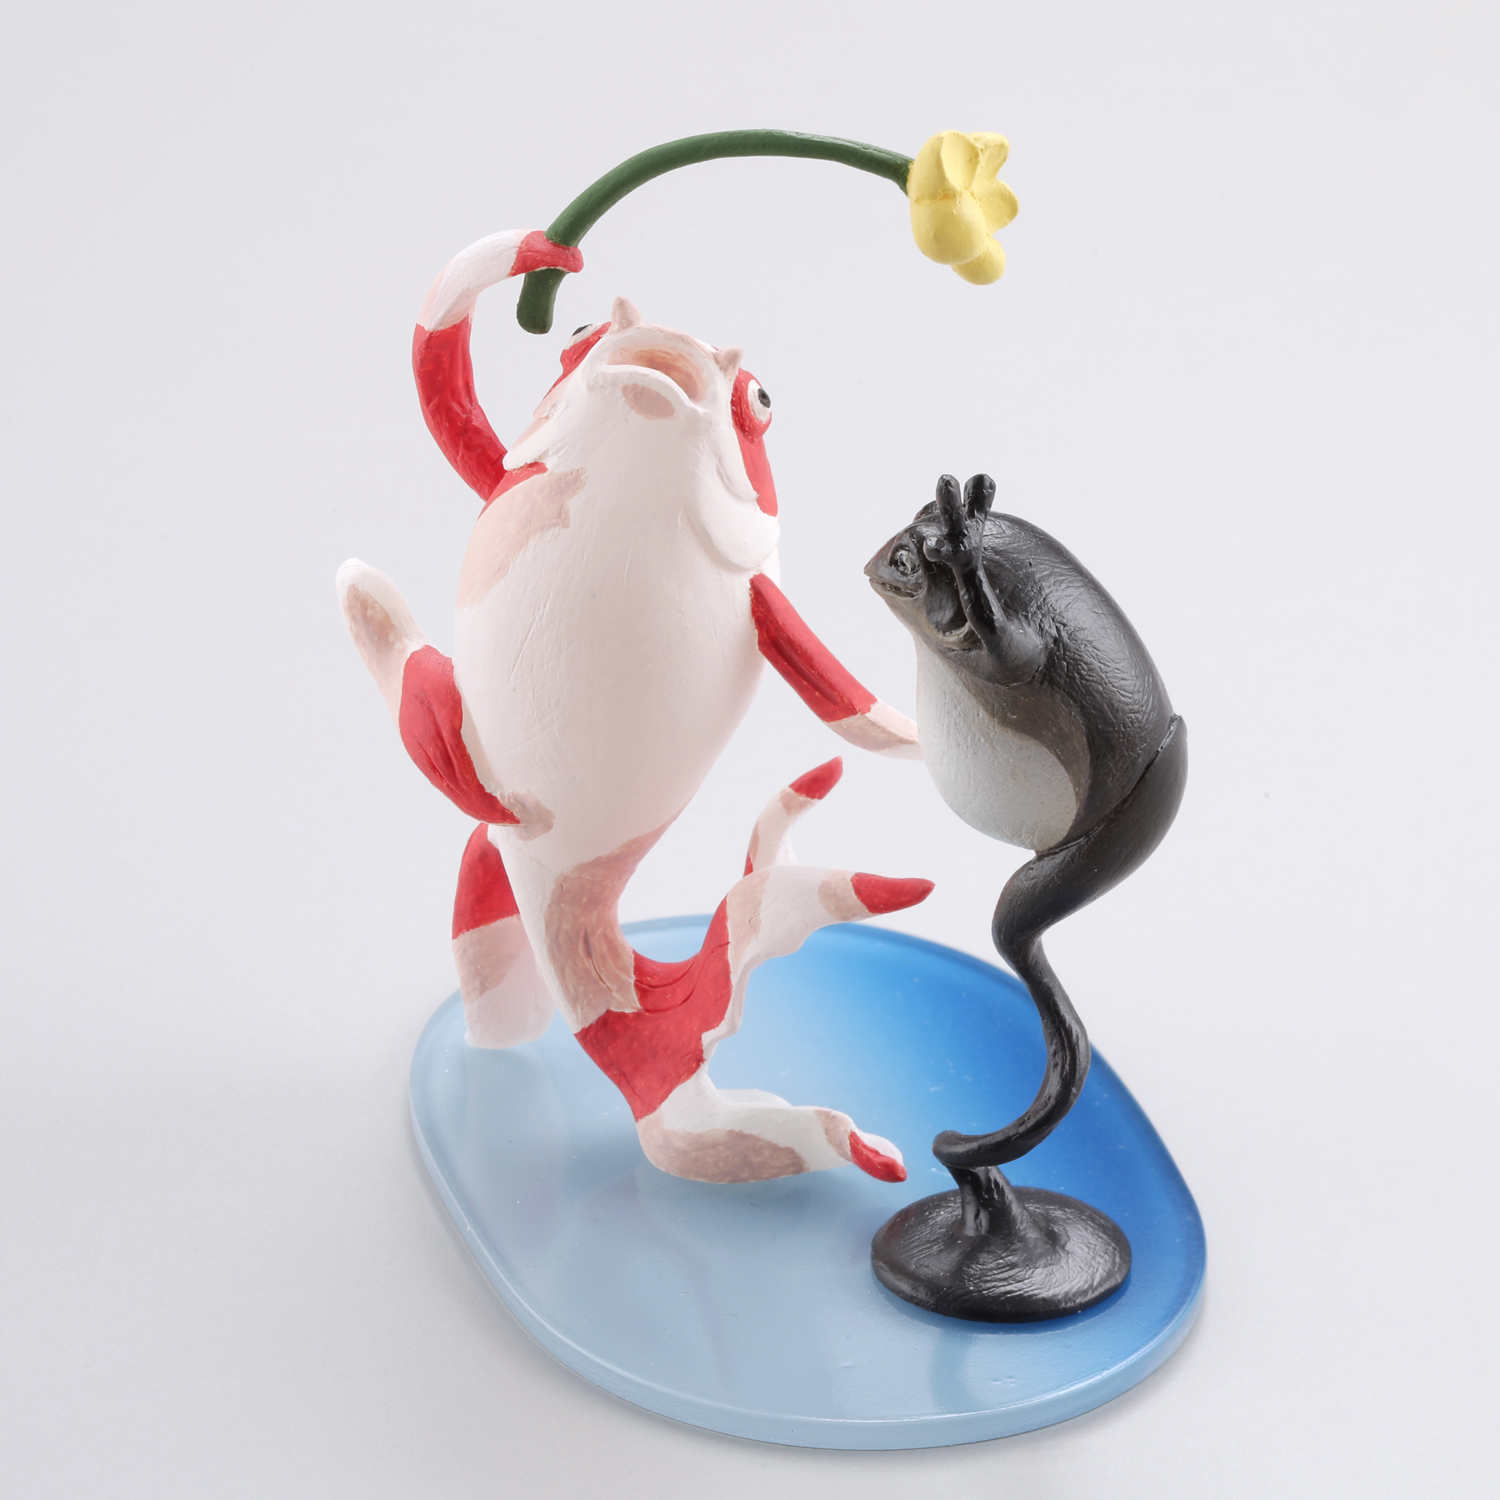 miniQ 歌川国芳の金魚づくし『酒のざしき』|海洋堂 | ユニオンクリエイティブ | キャラクターフィギュアの企画・製造・販売